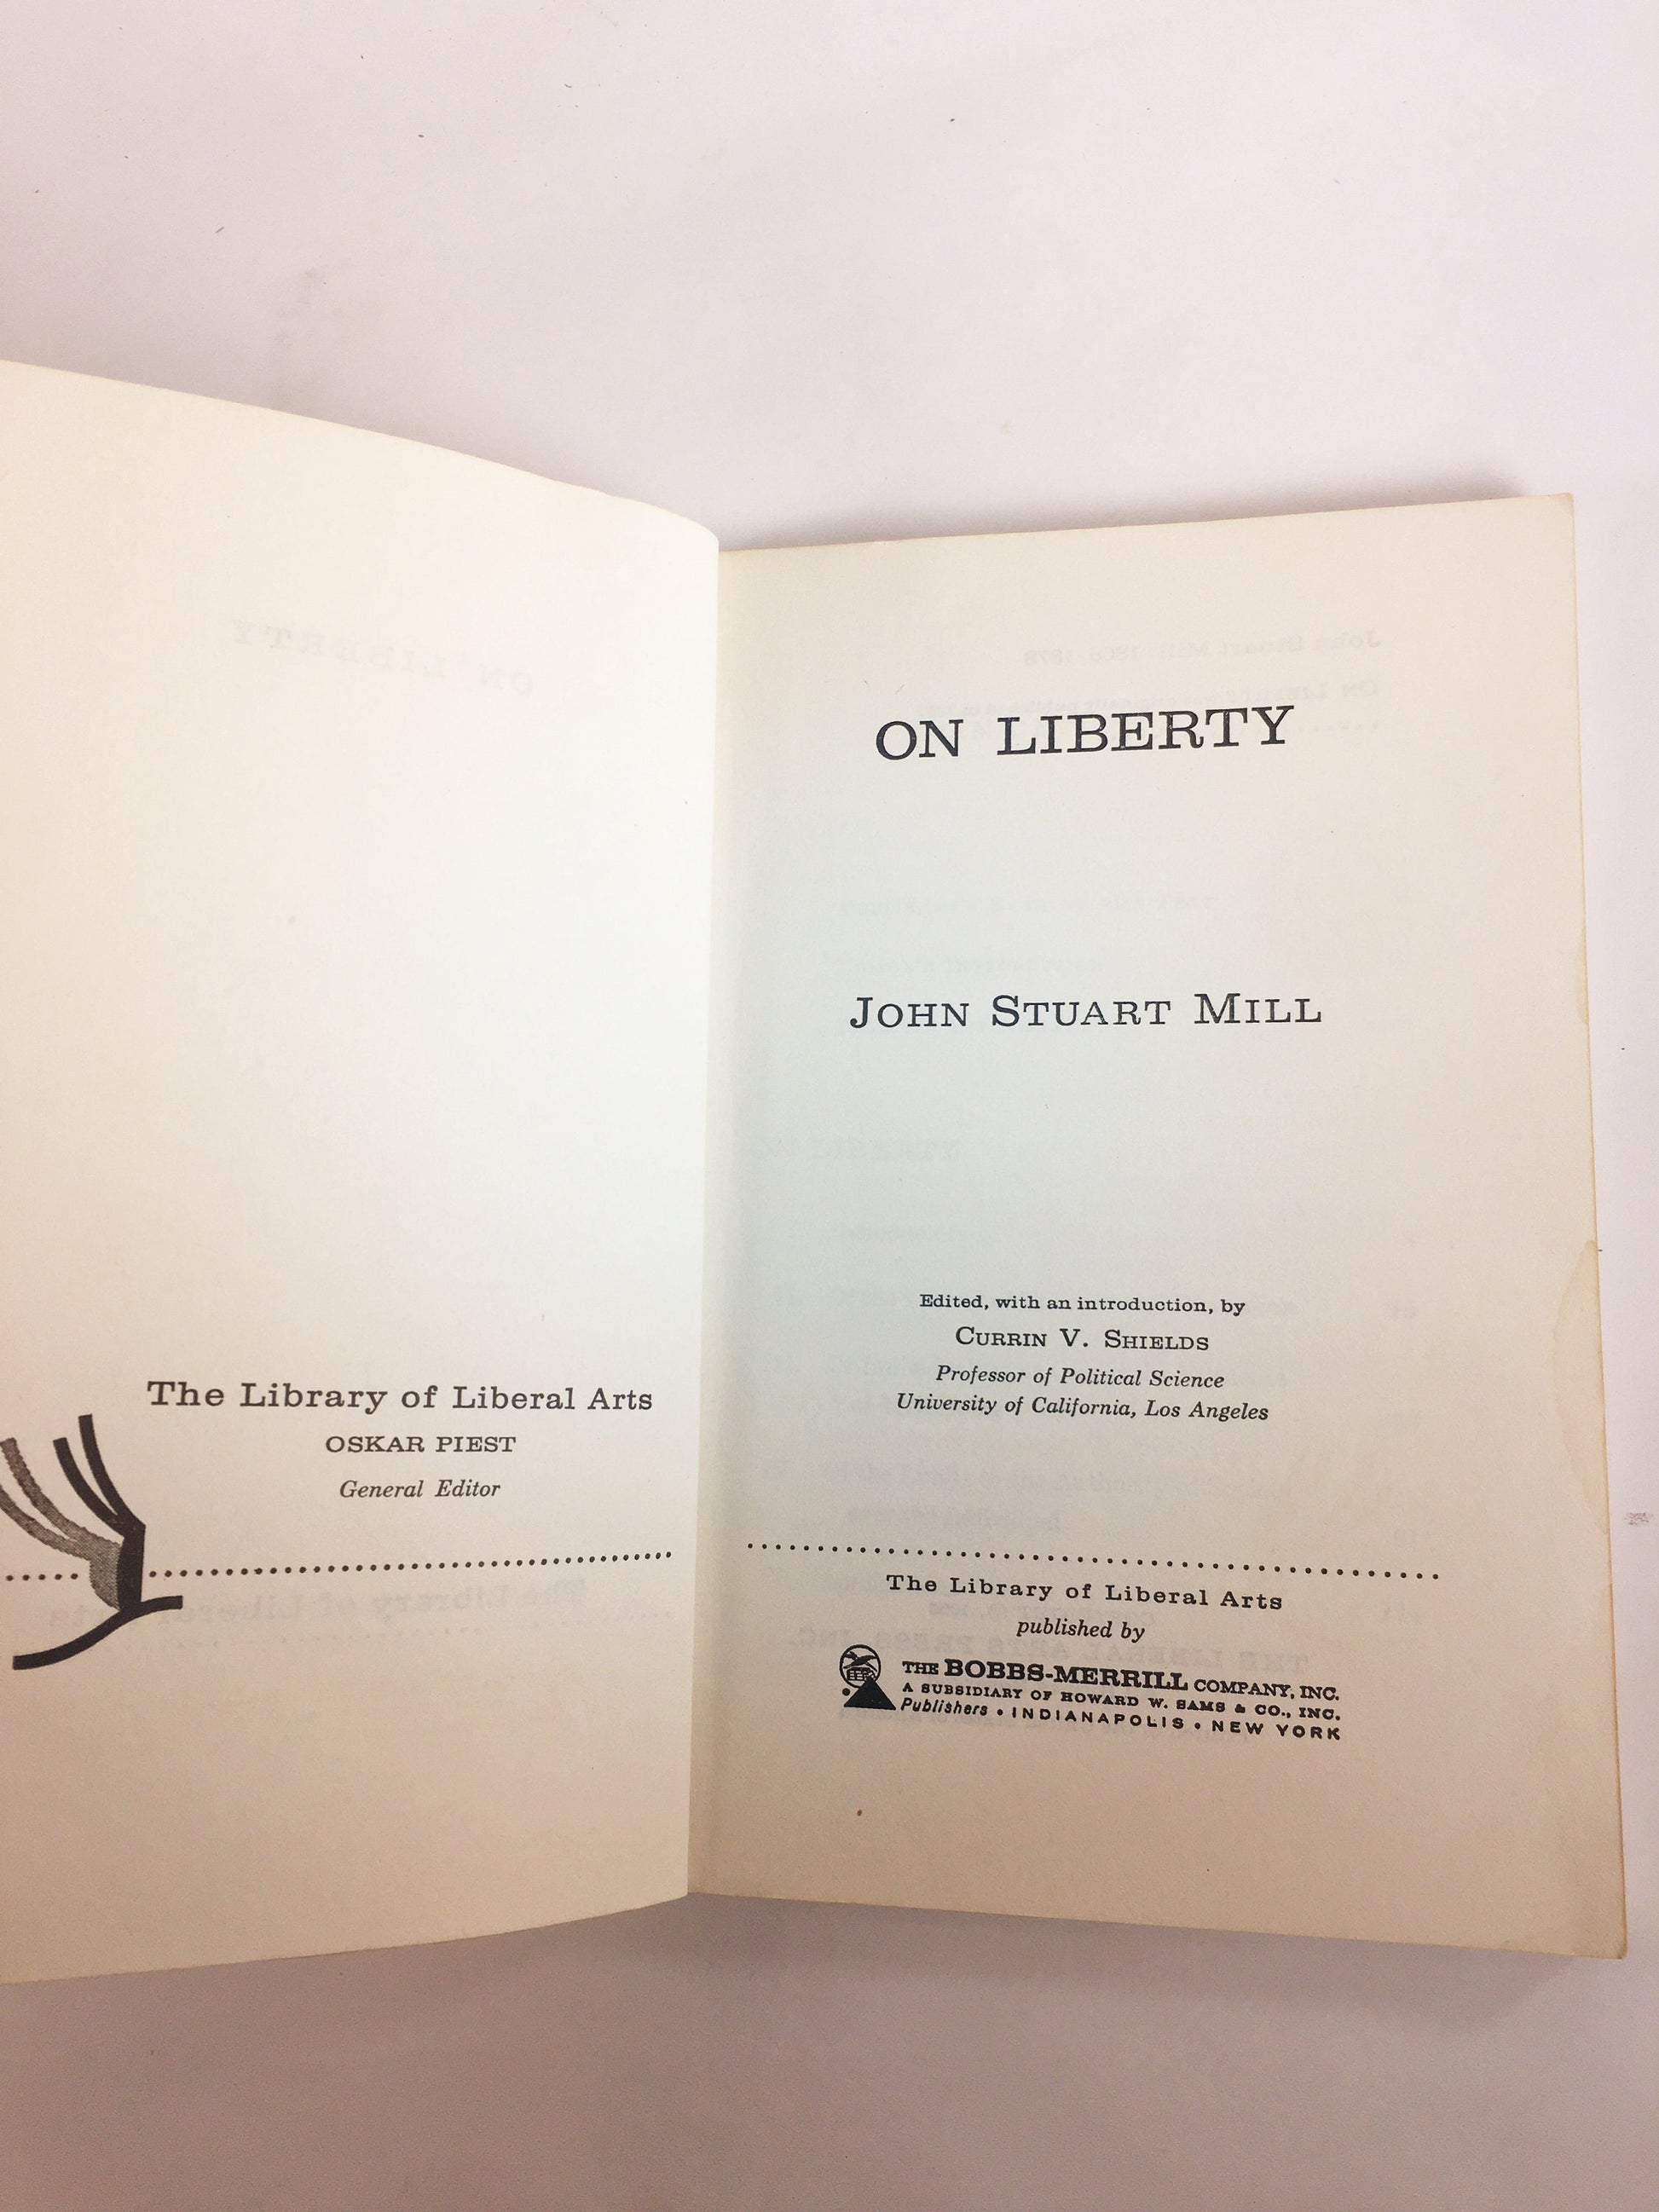 John Stuart Mills On Liberty Vintage paperback book circa 1956 Liberal Arts Press. Utilitarianism society and government philosophy.